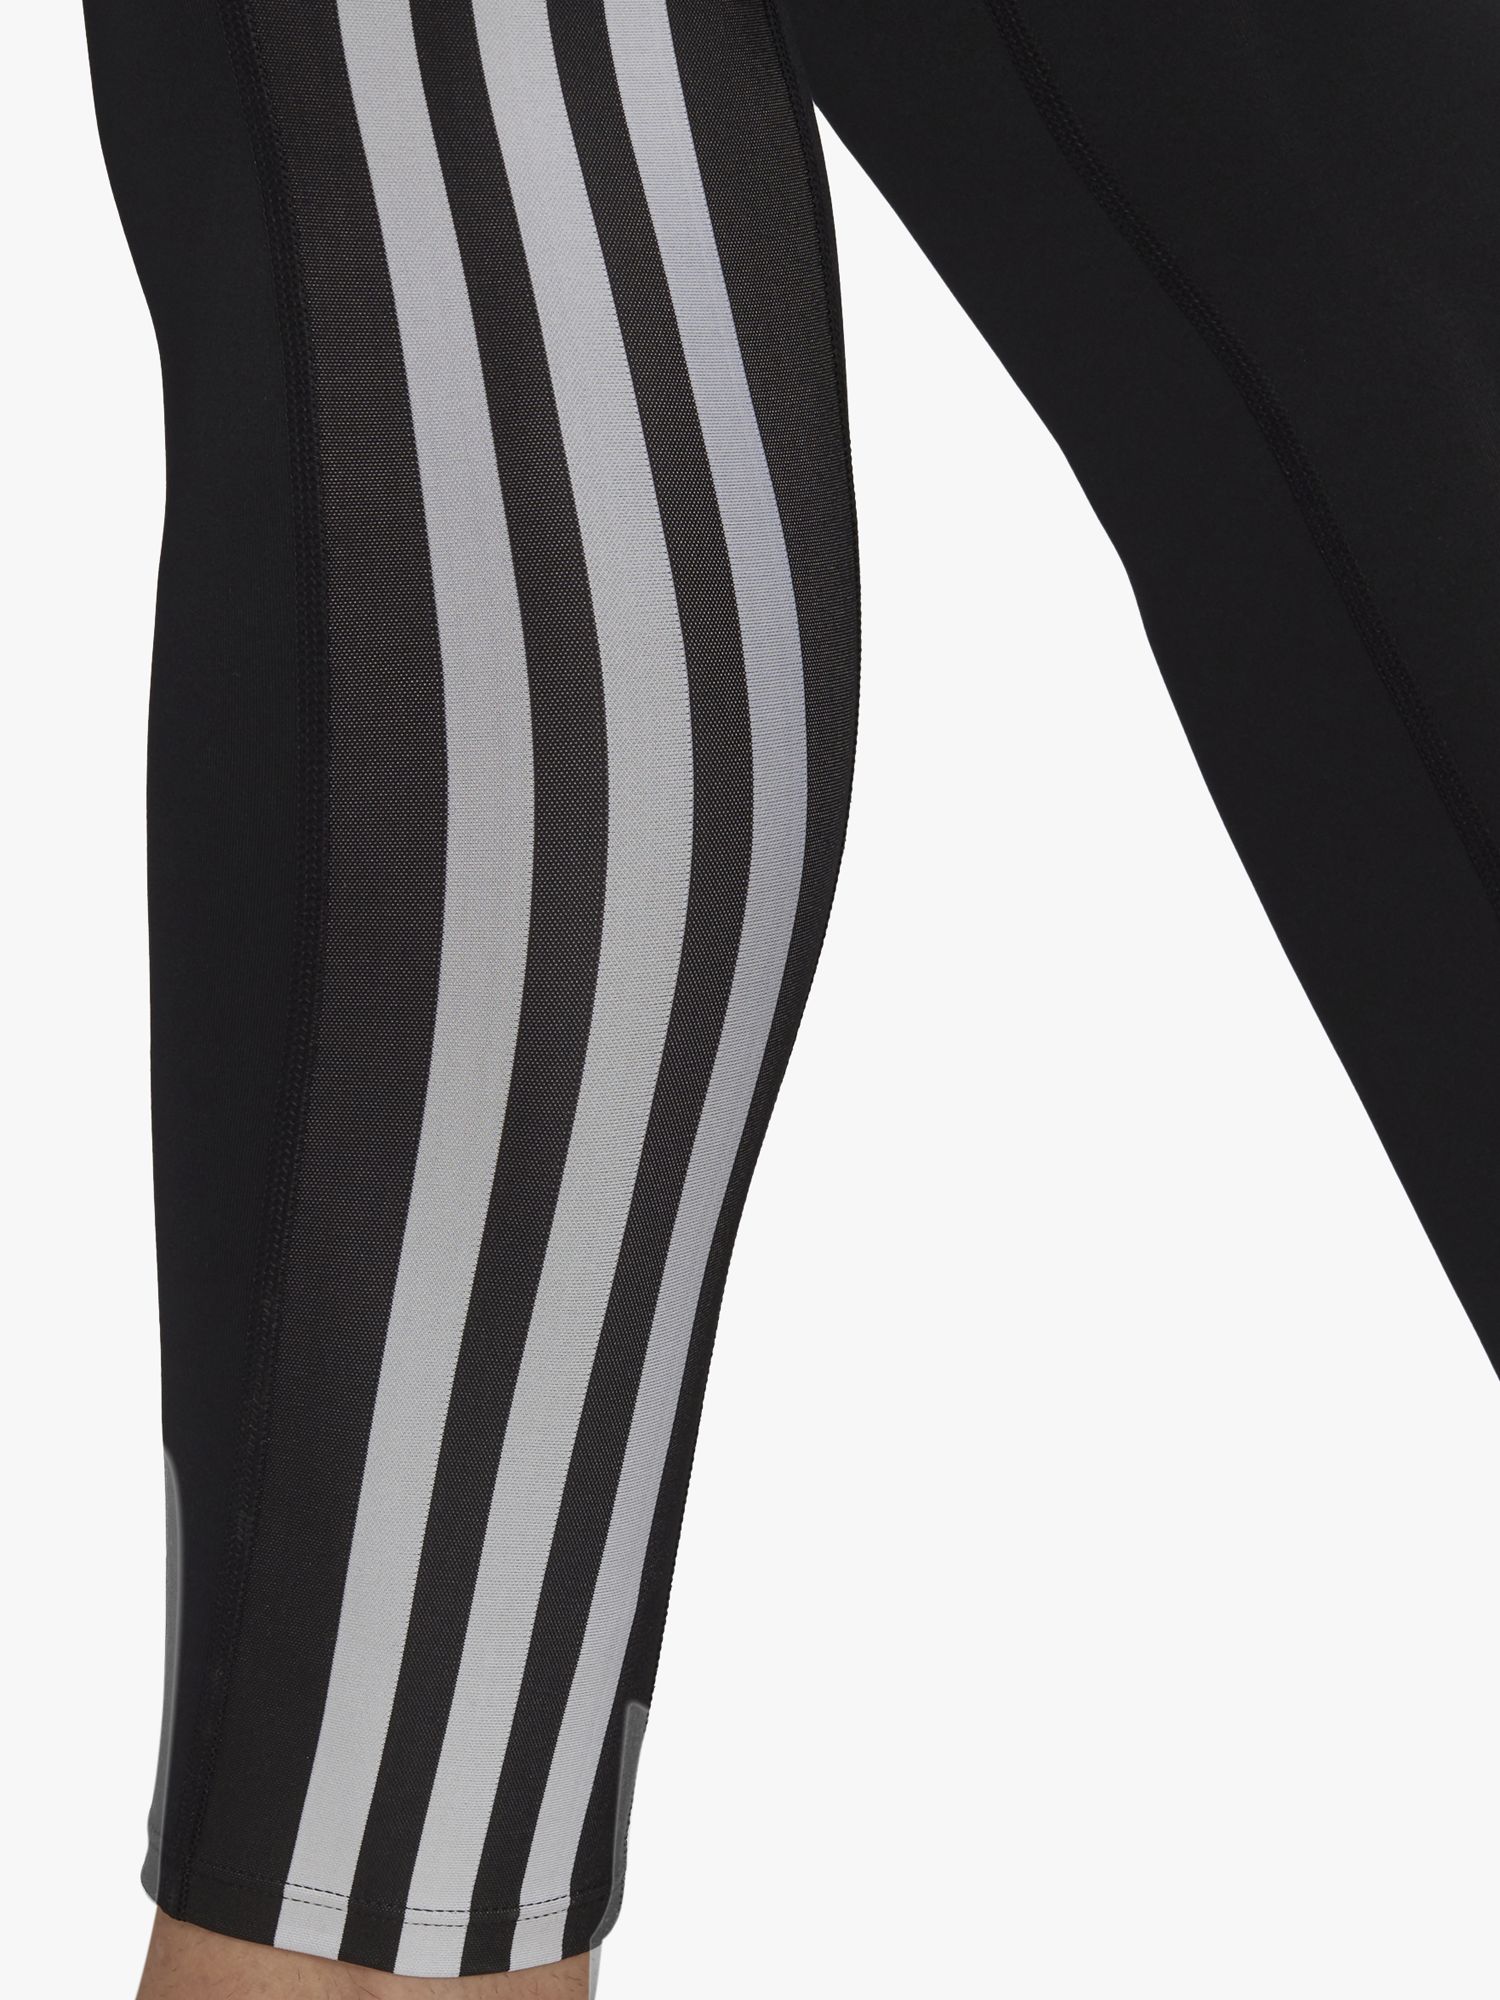 Women's Active Techfit 3-Stripes Training Leggings